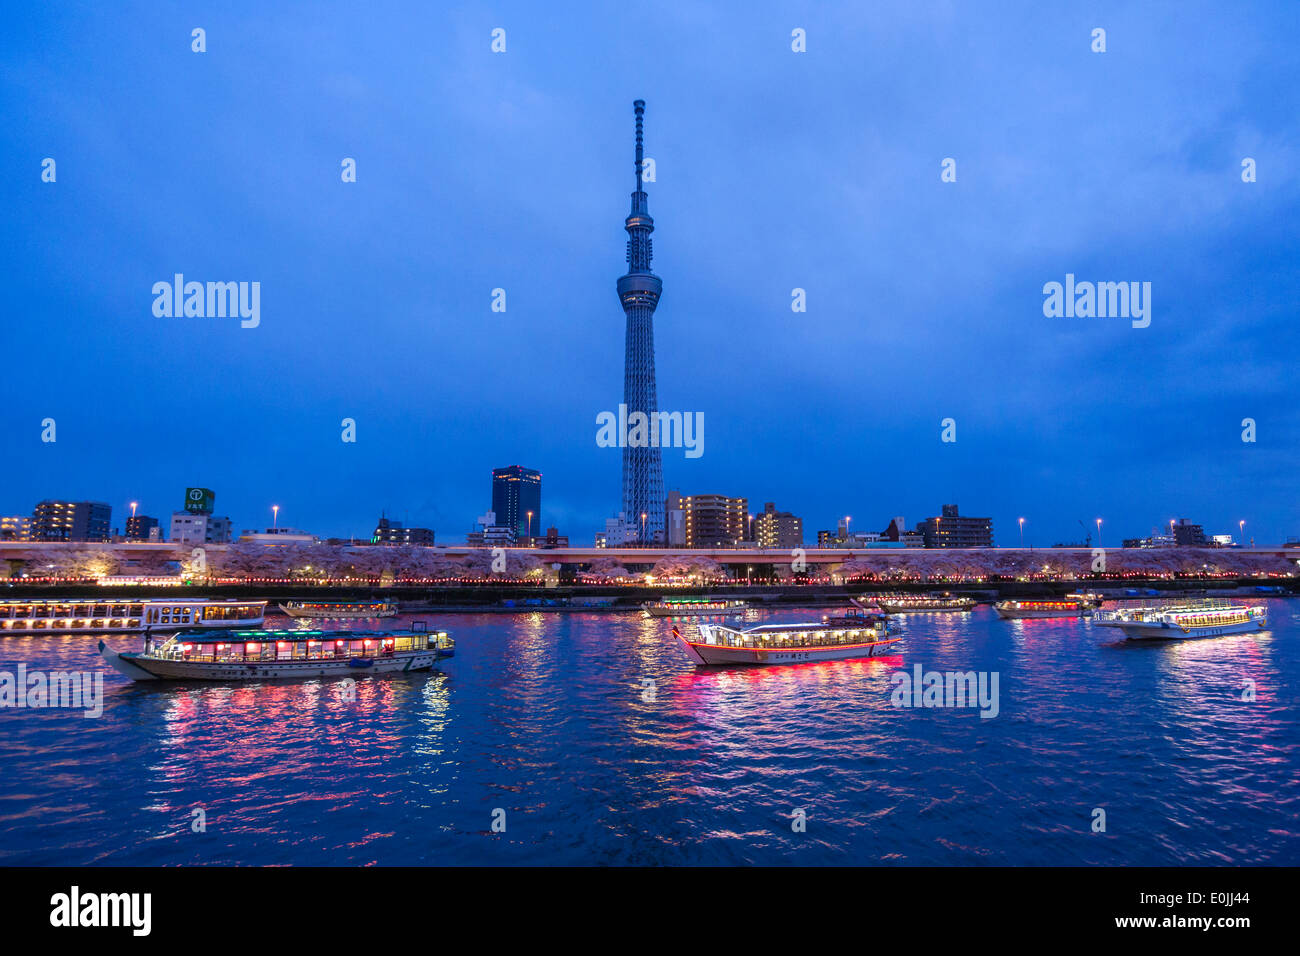 Tokyo skytree tower and Sumida River Stock Photo